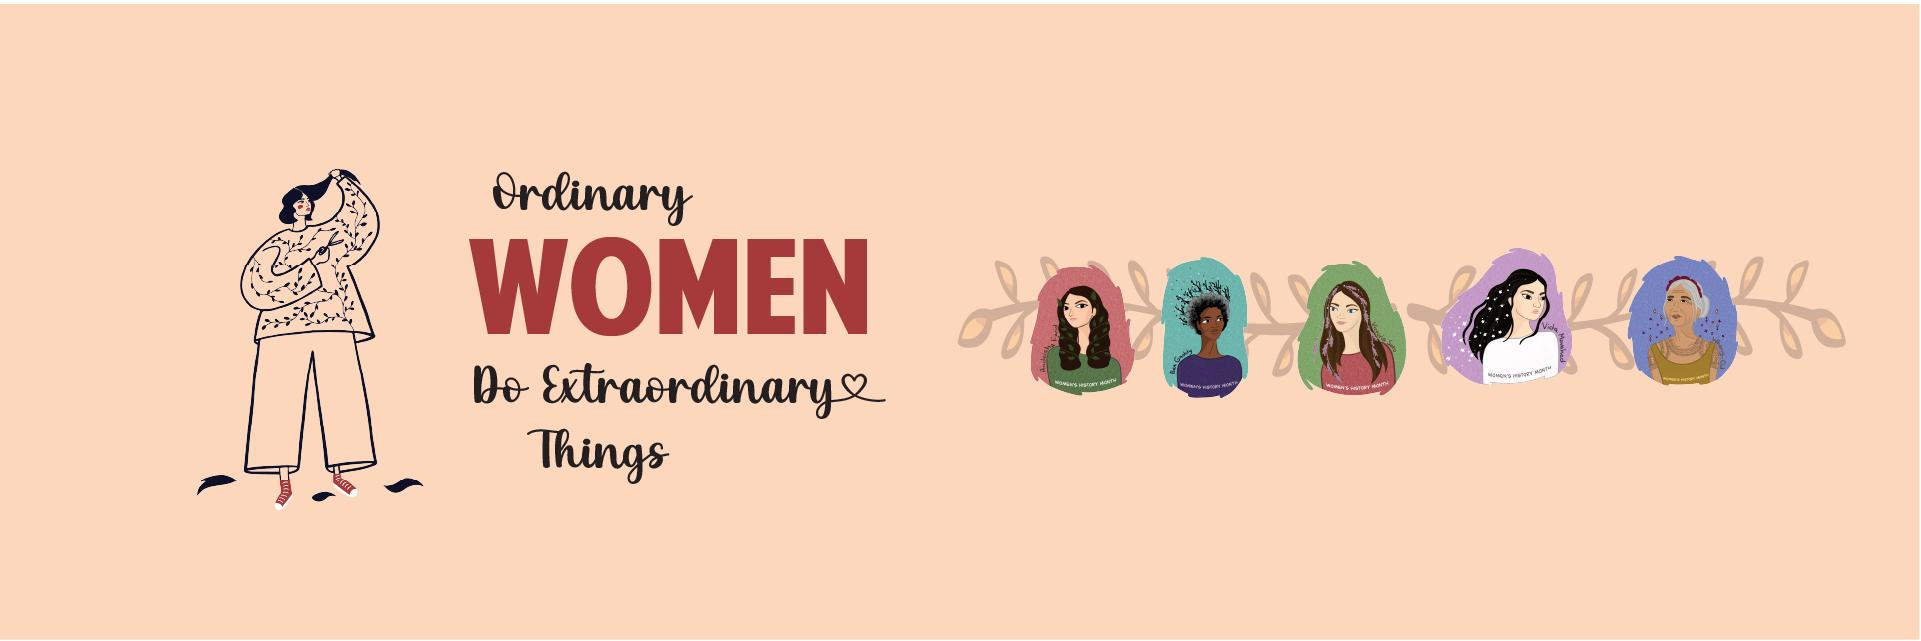 Women's History Month: Ordinary Women Do Extaordinary Things